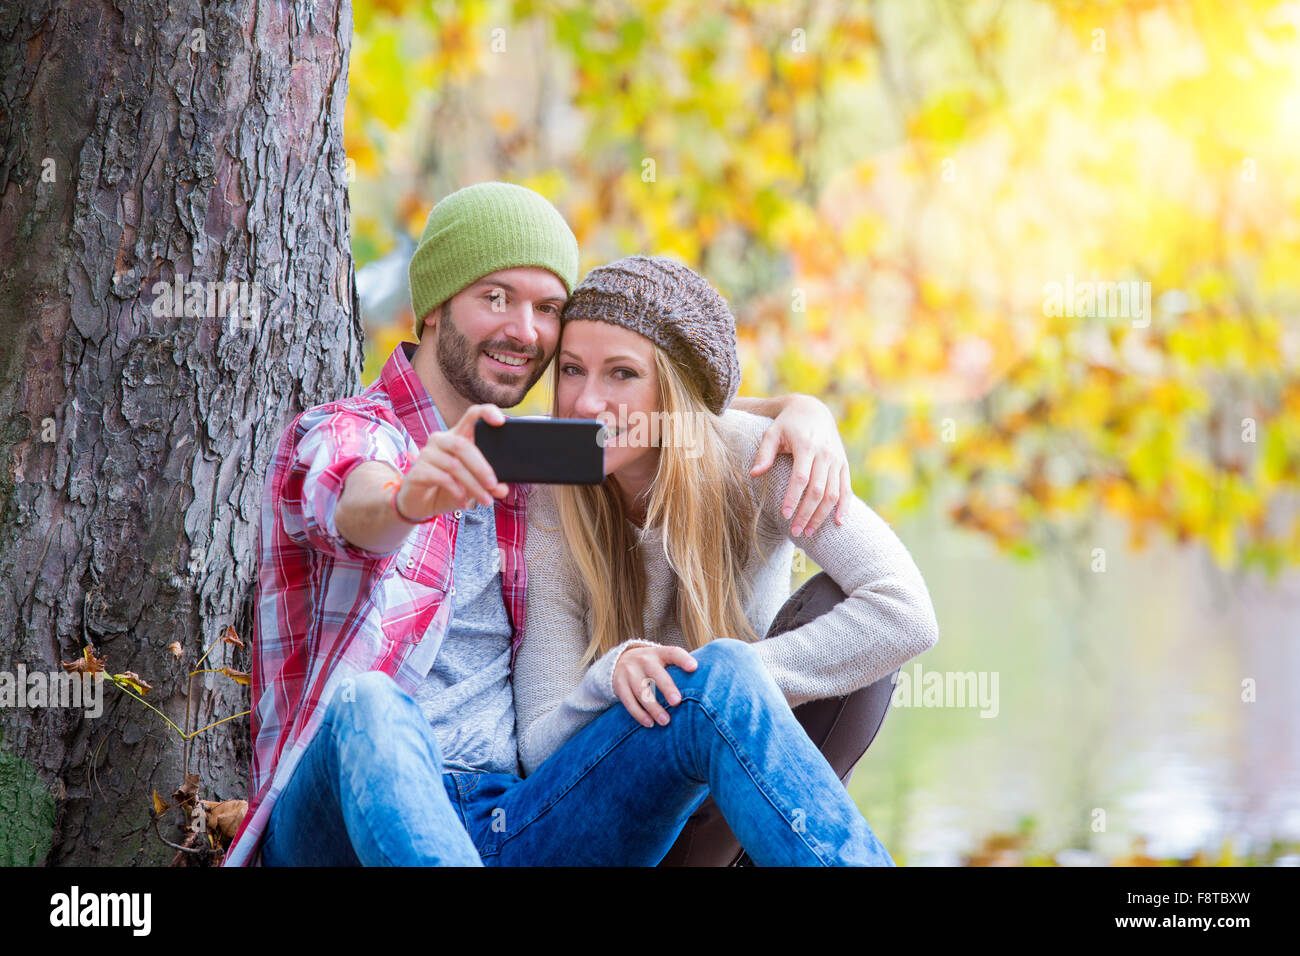 Coppia giovane dating in foresta Foto Stock